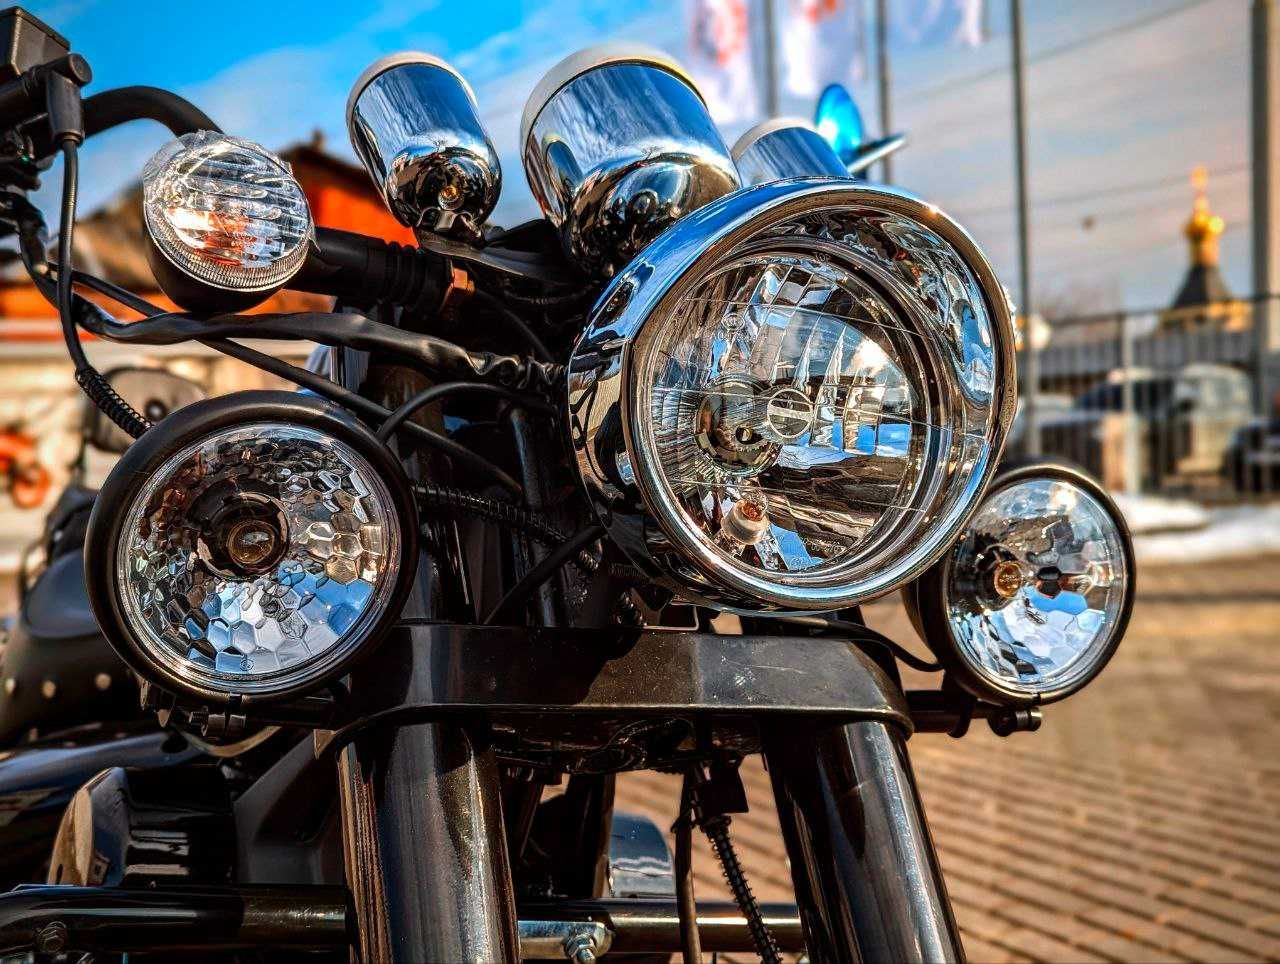 Купити мотоцикл RIDER RENEGADE 250CC в Арт Мото Суми